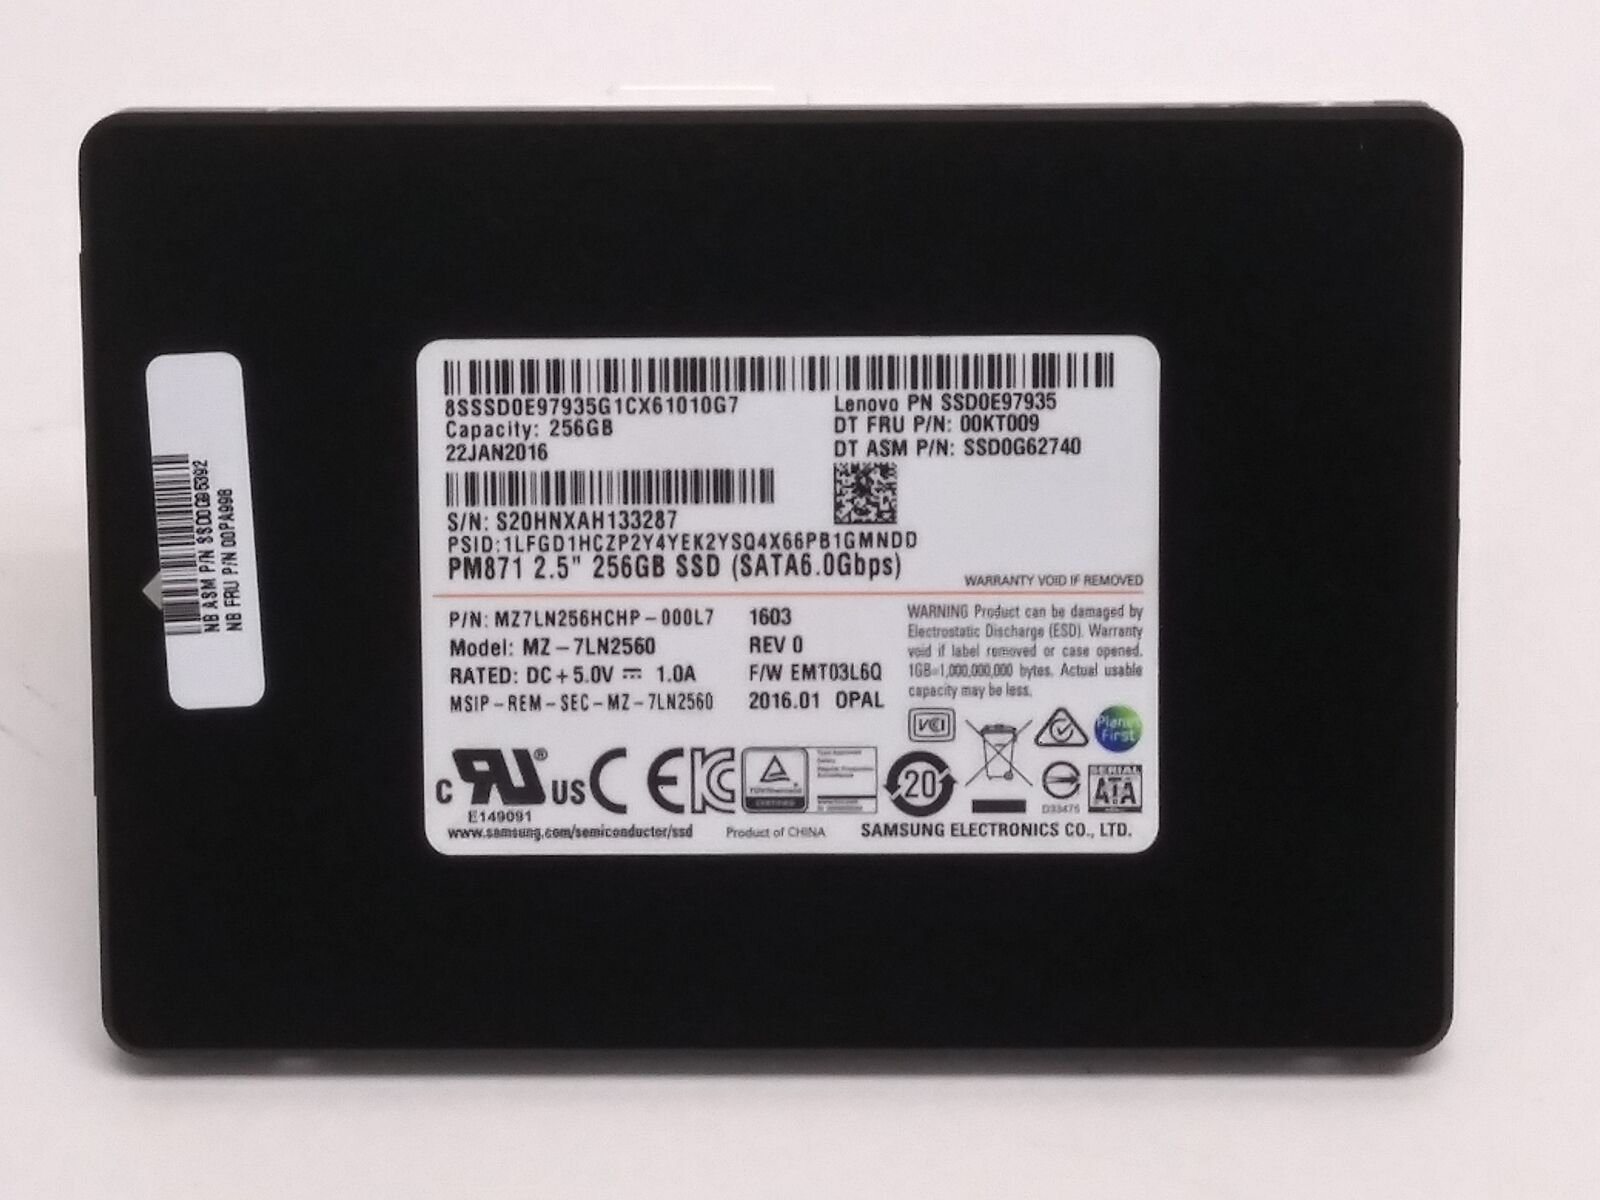 Samsung MZ-7LN2560 PM871 256 GB 2.5 in SATA III Solid State Drive